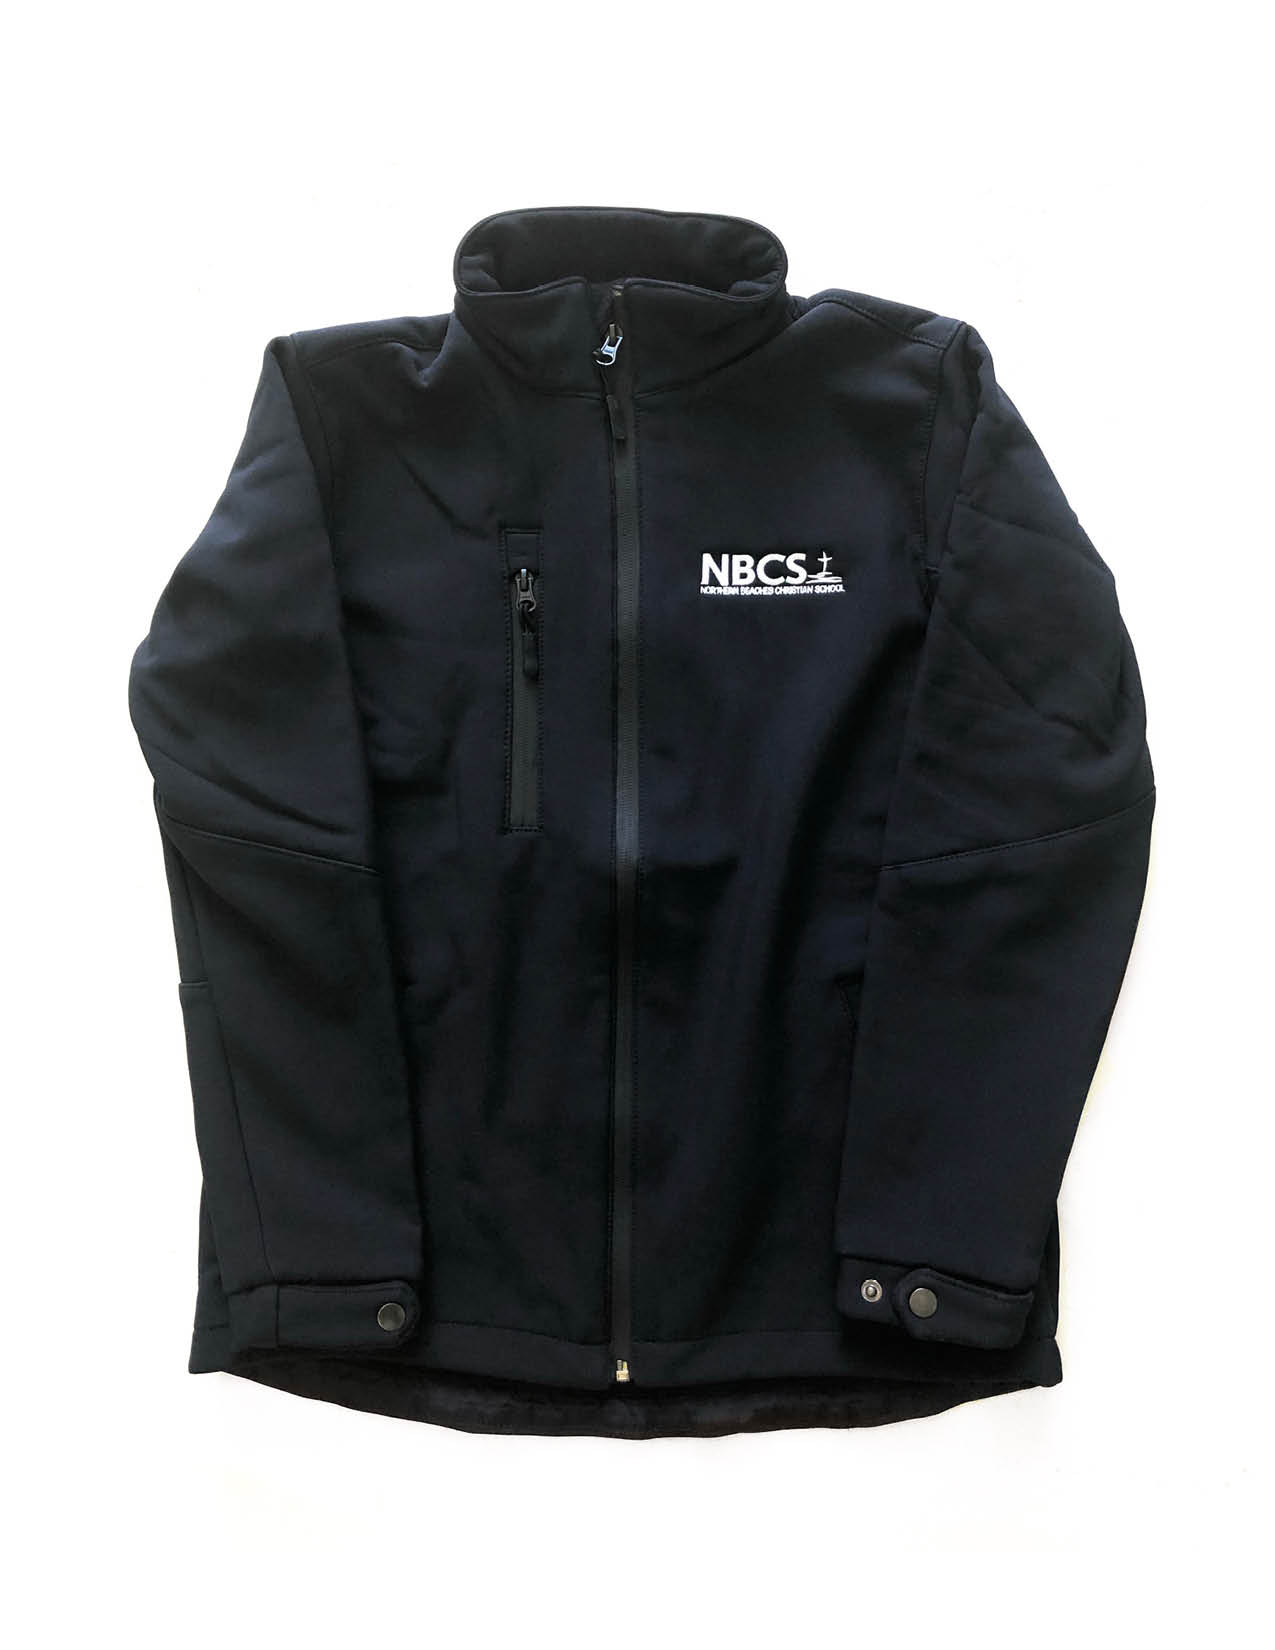 Nbcs Unisex Navy Softshell Jacket | Shop at Pickles Schoolwear | School ...